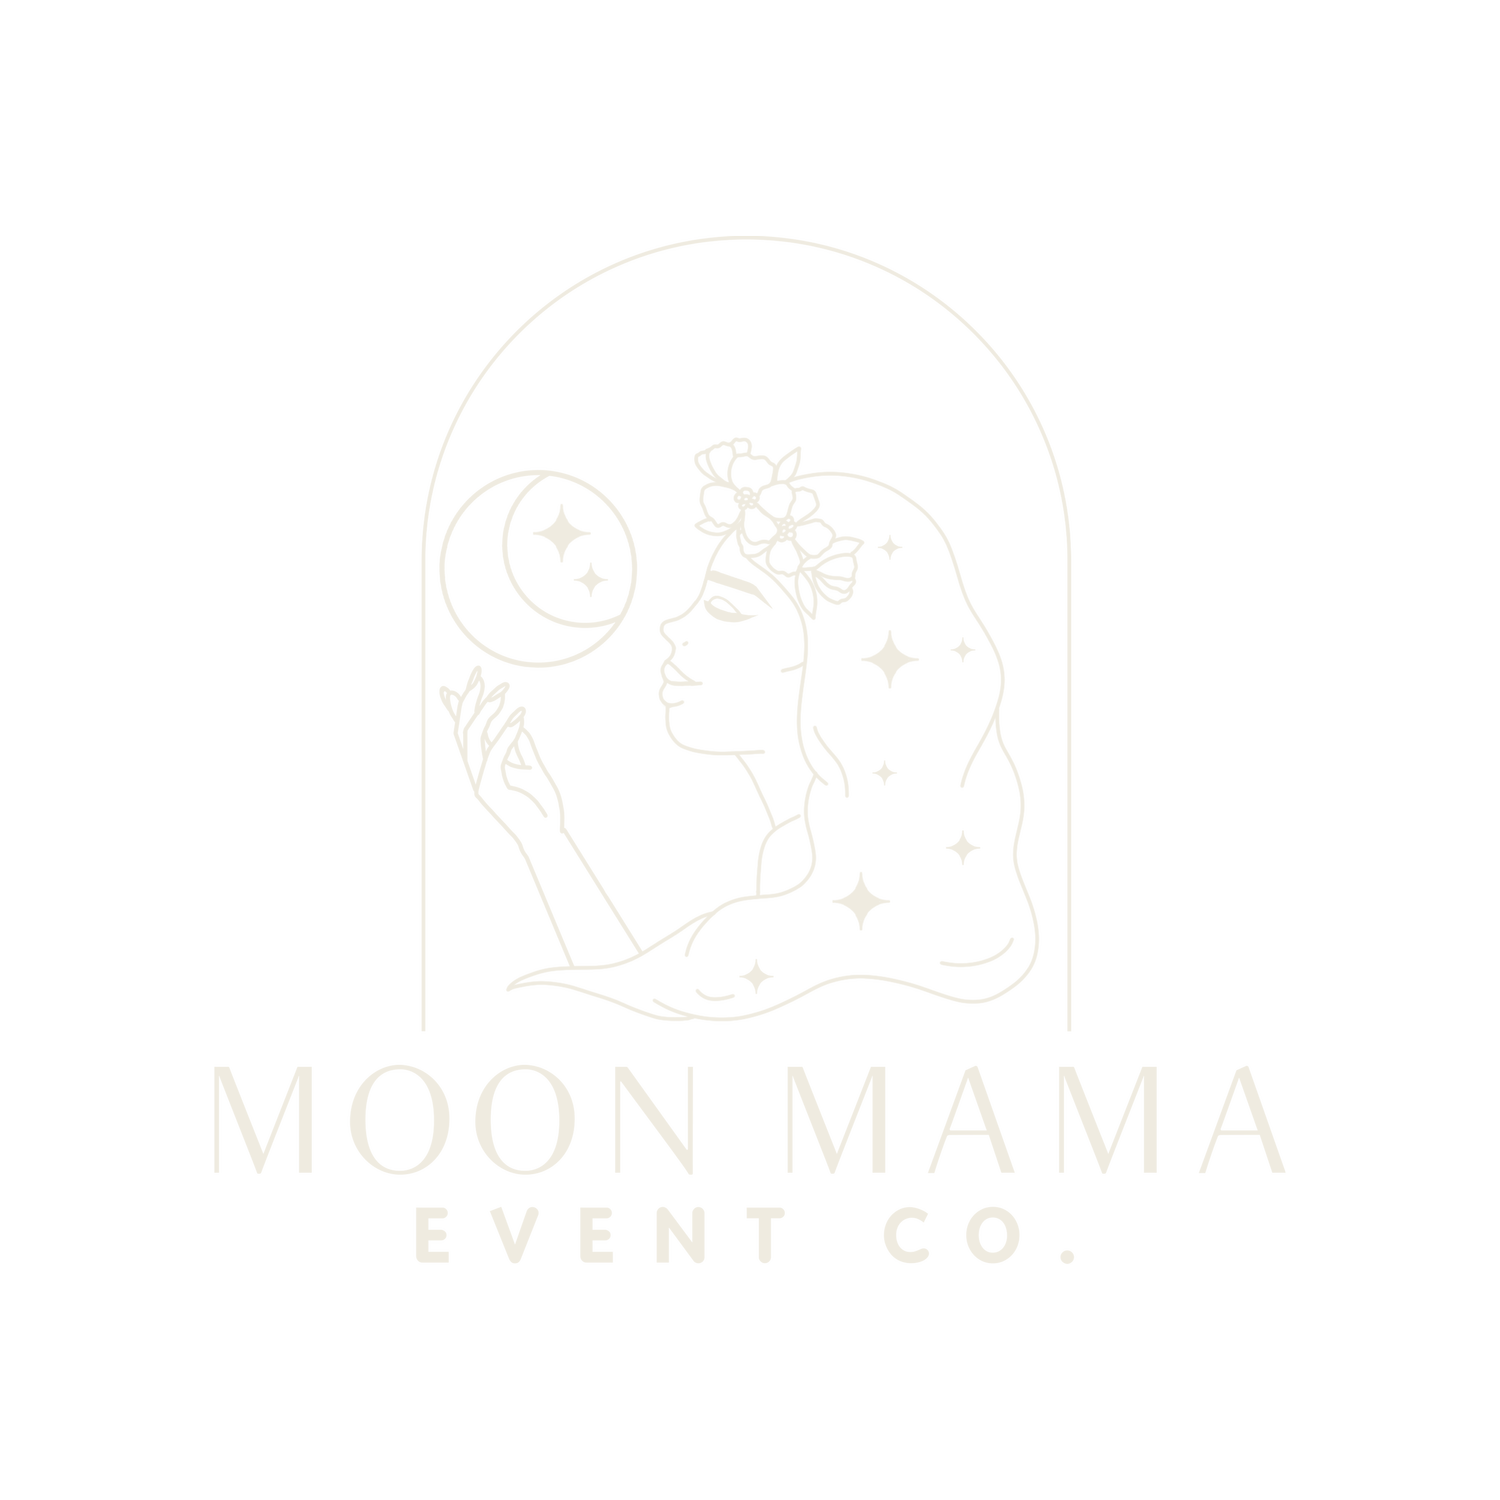 Moon Mama Event Co.